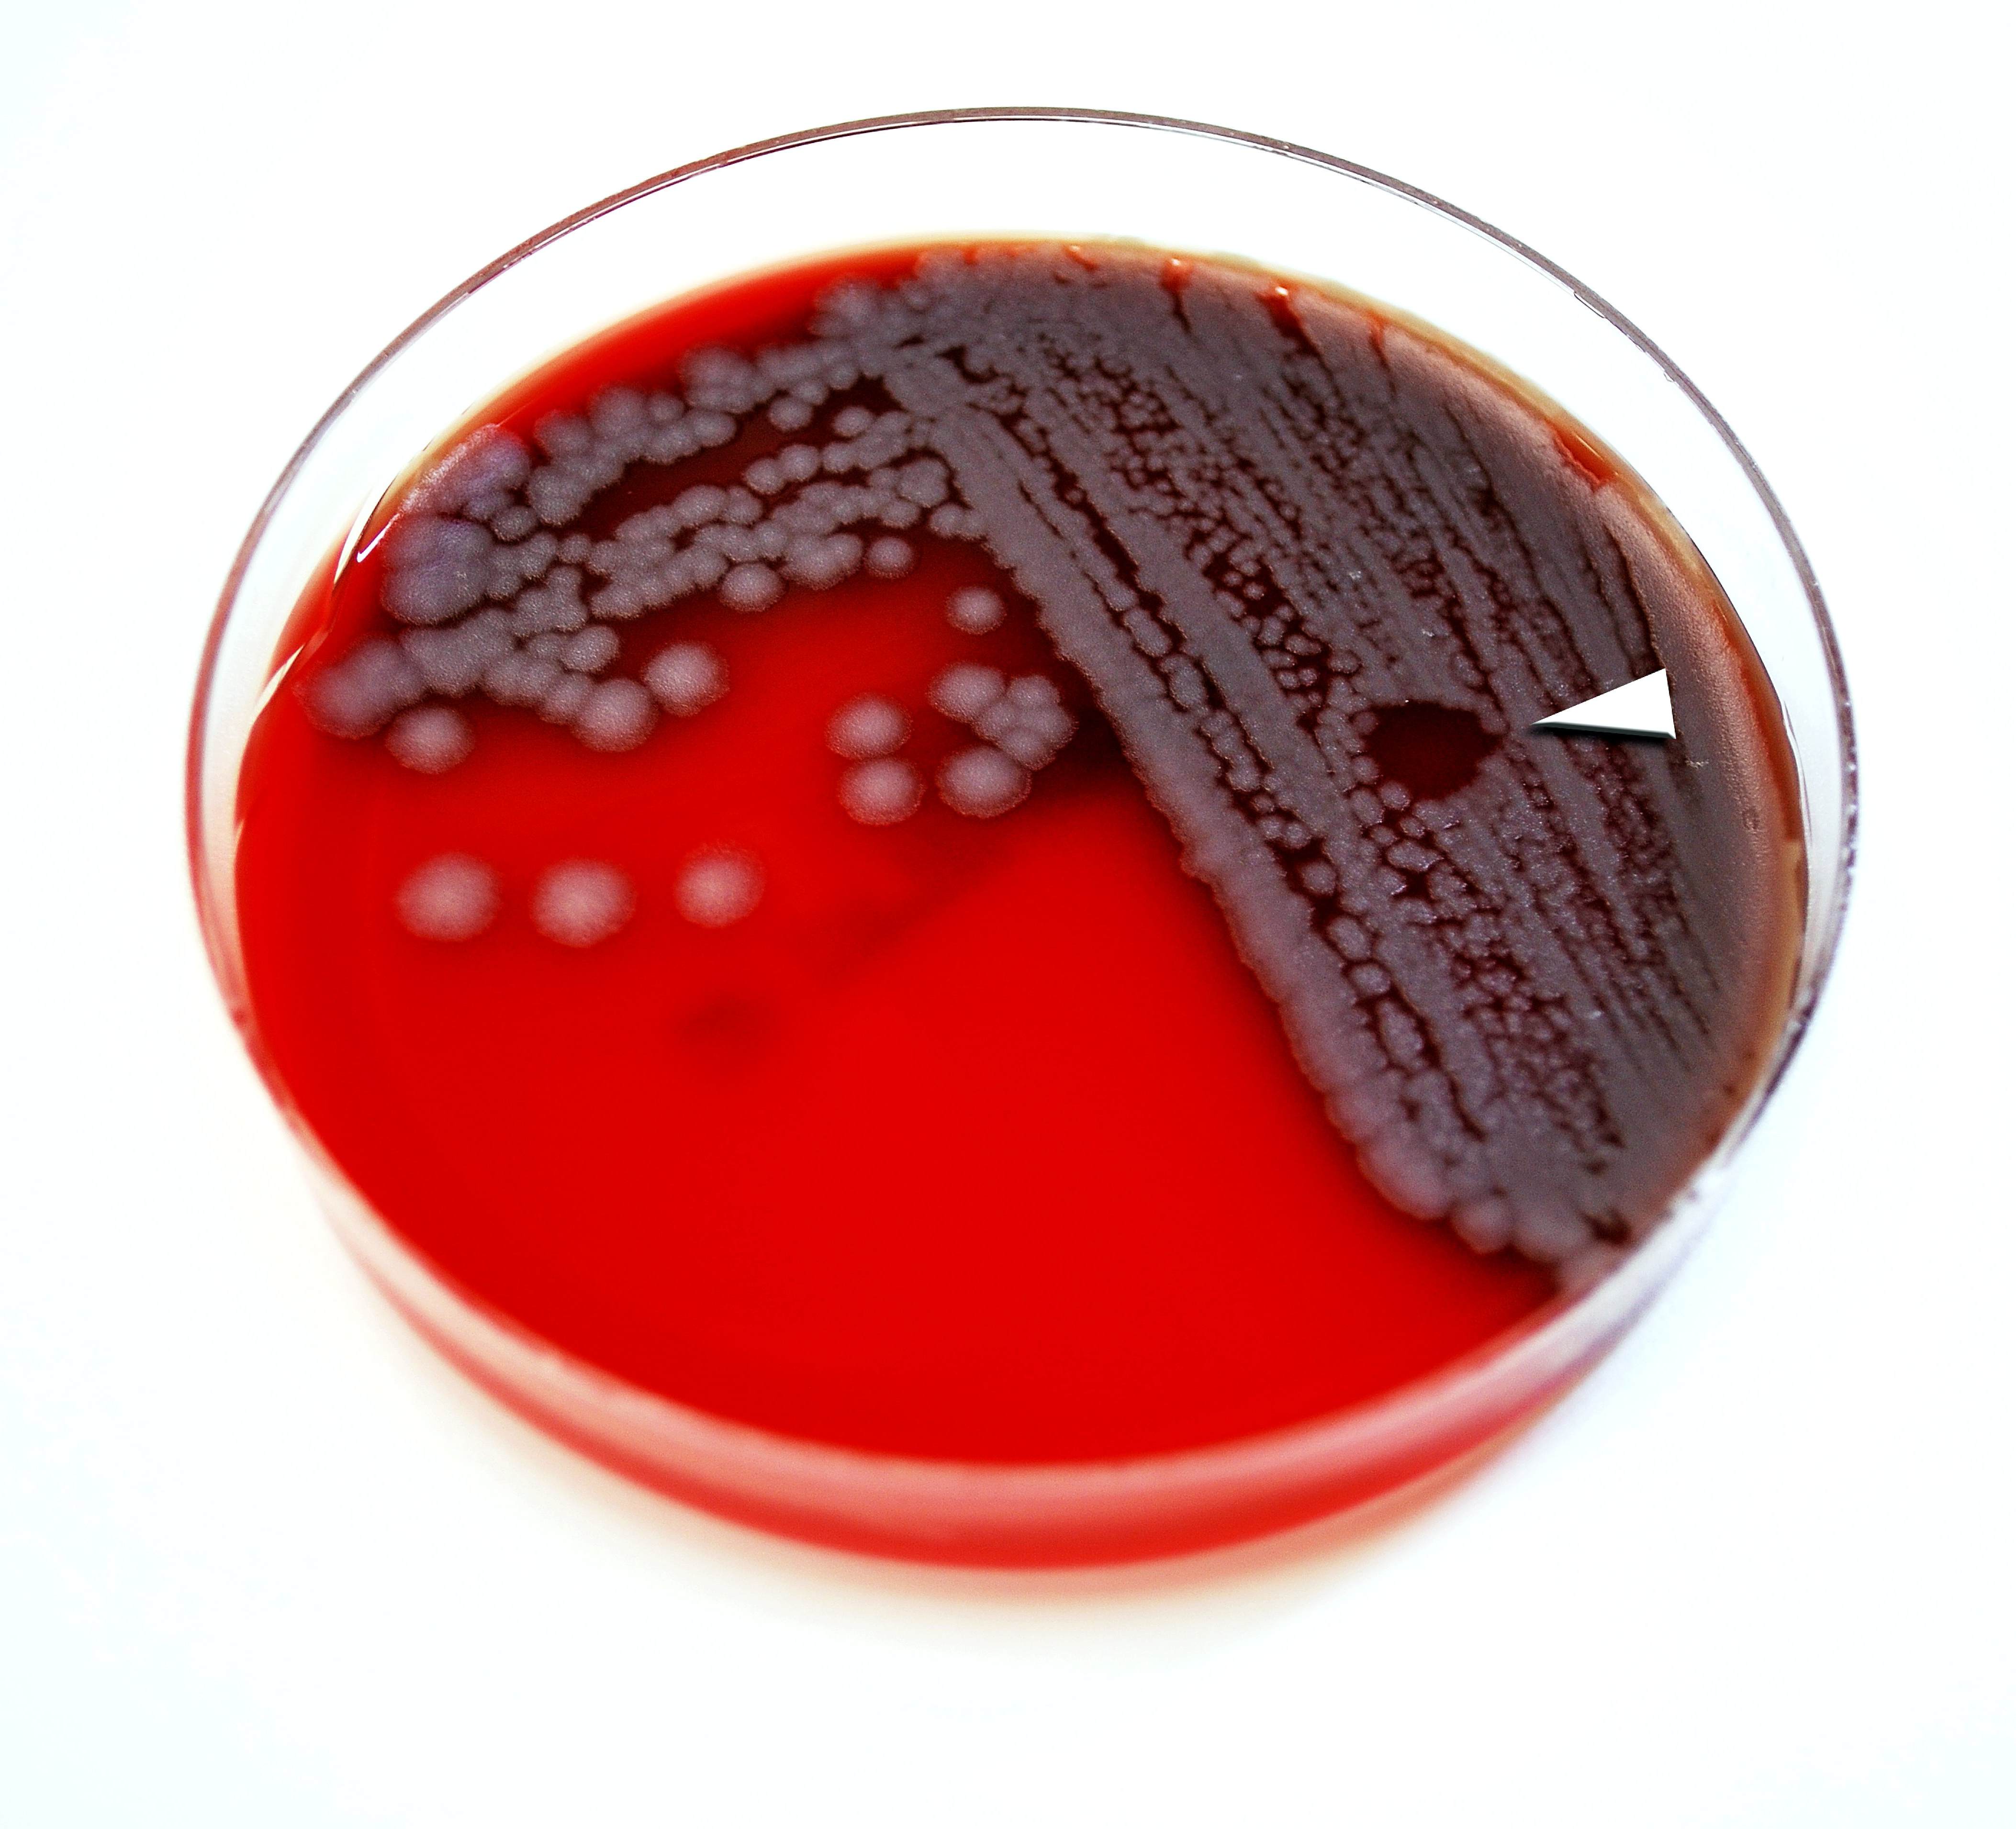 Икра при язве. Bacillus anthracis, а22 (Сибирская язва). Bacillus anthracis на кровяном агаре. Бактериоскопия сибирской язвы.